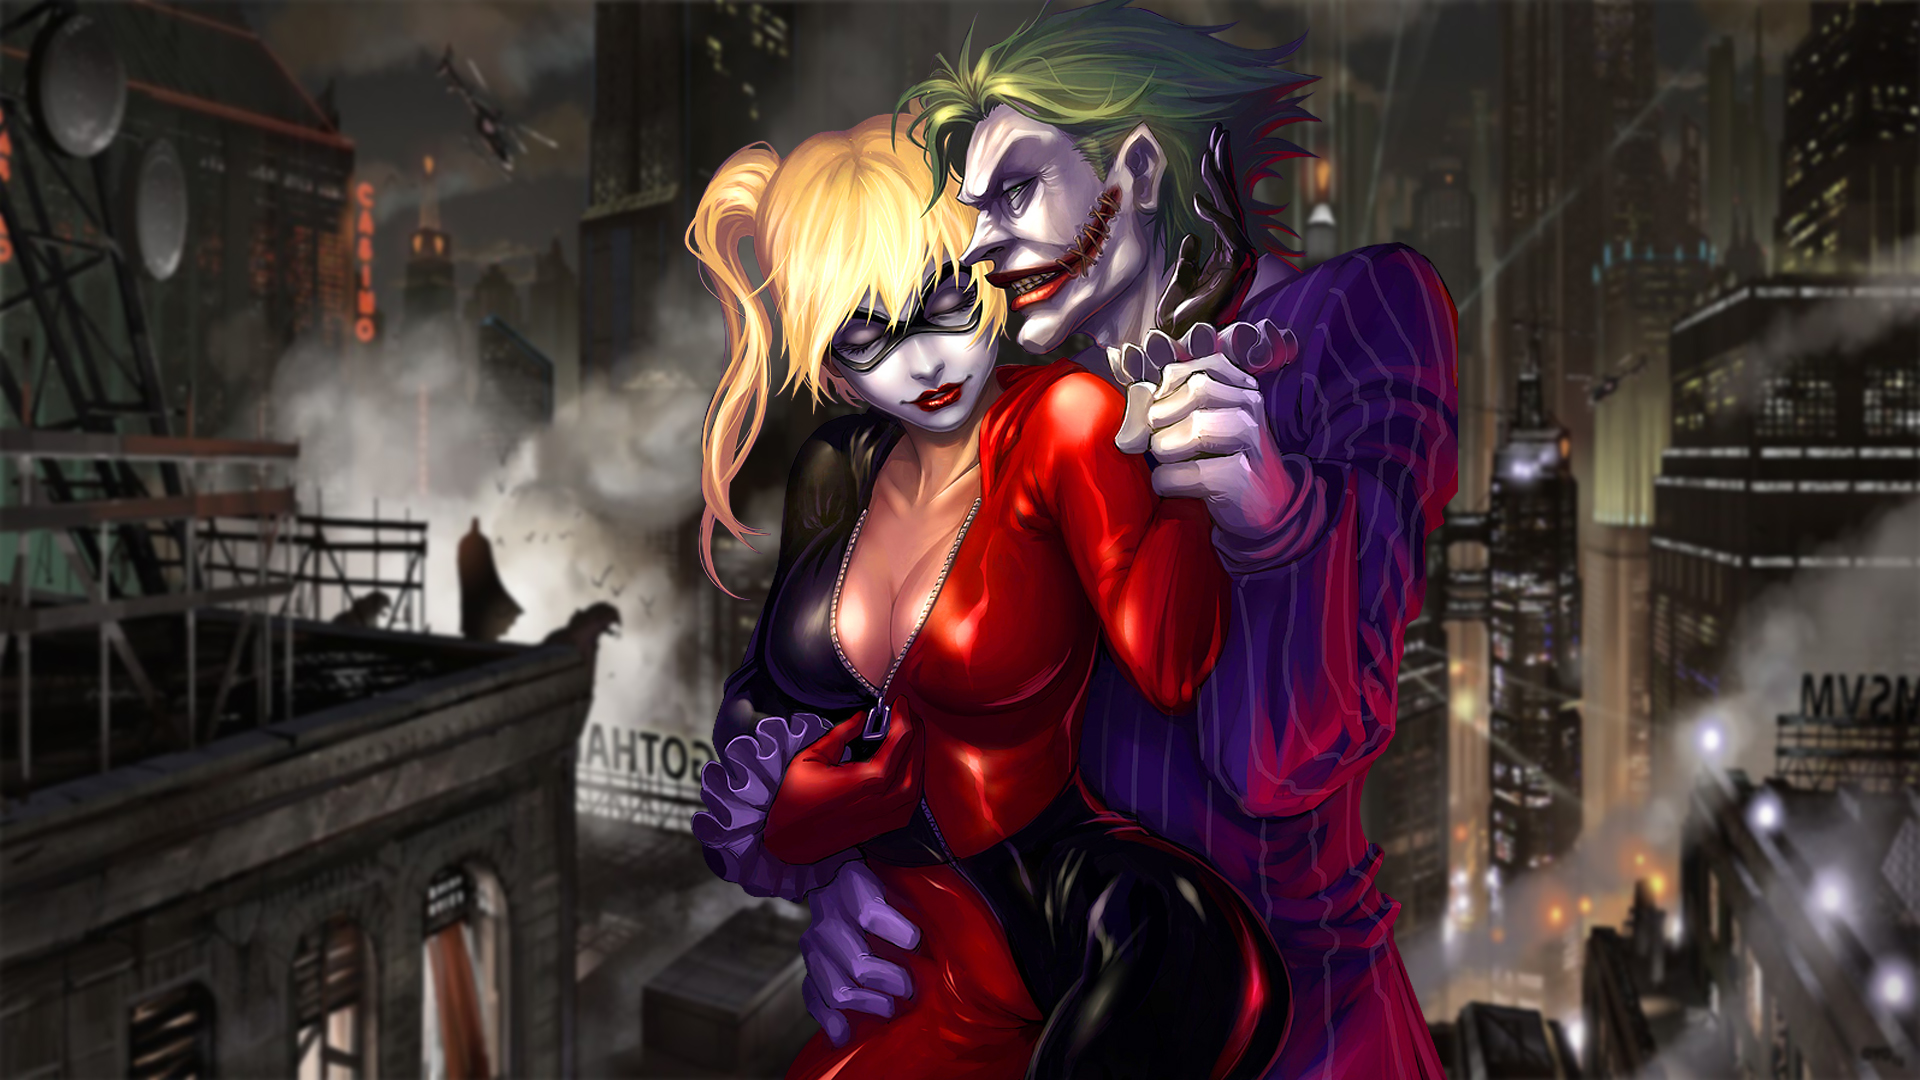  Wallpaper  Joker  and Harley  Quinn  by RegorZero on DeviantArt